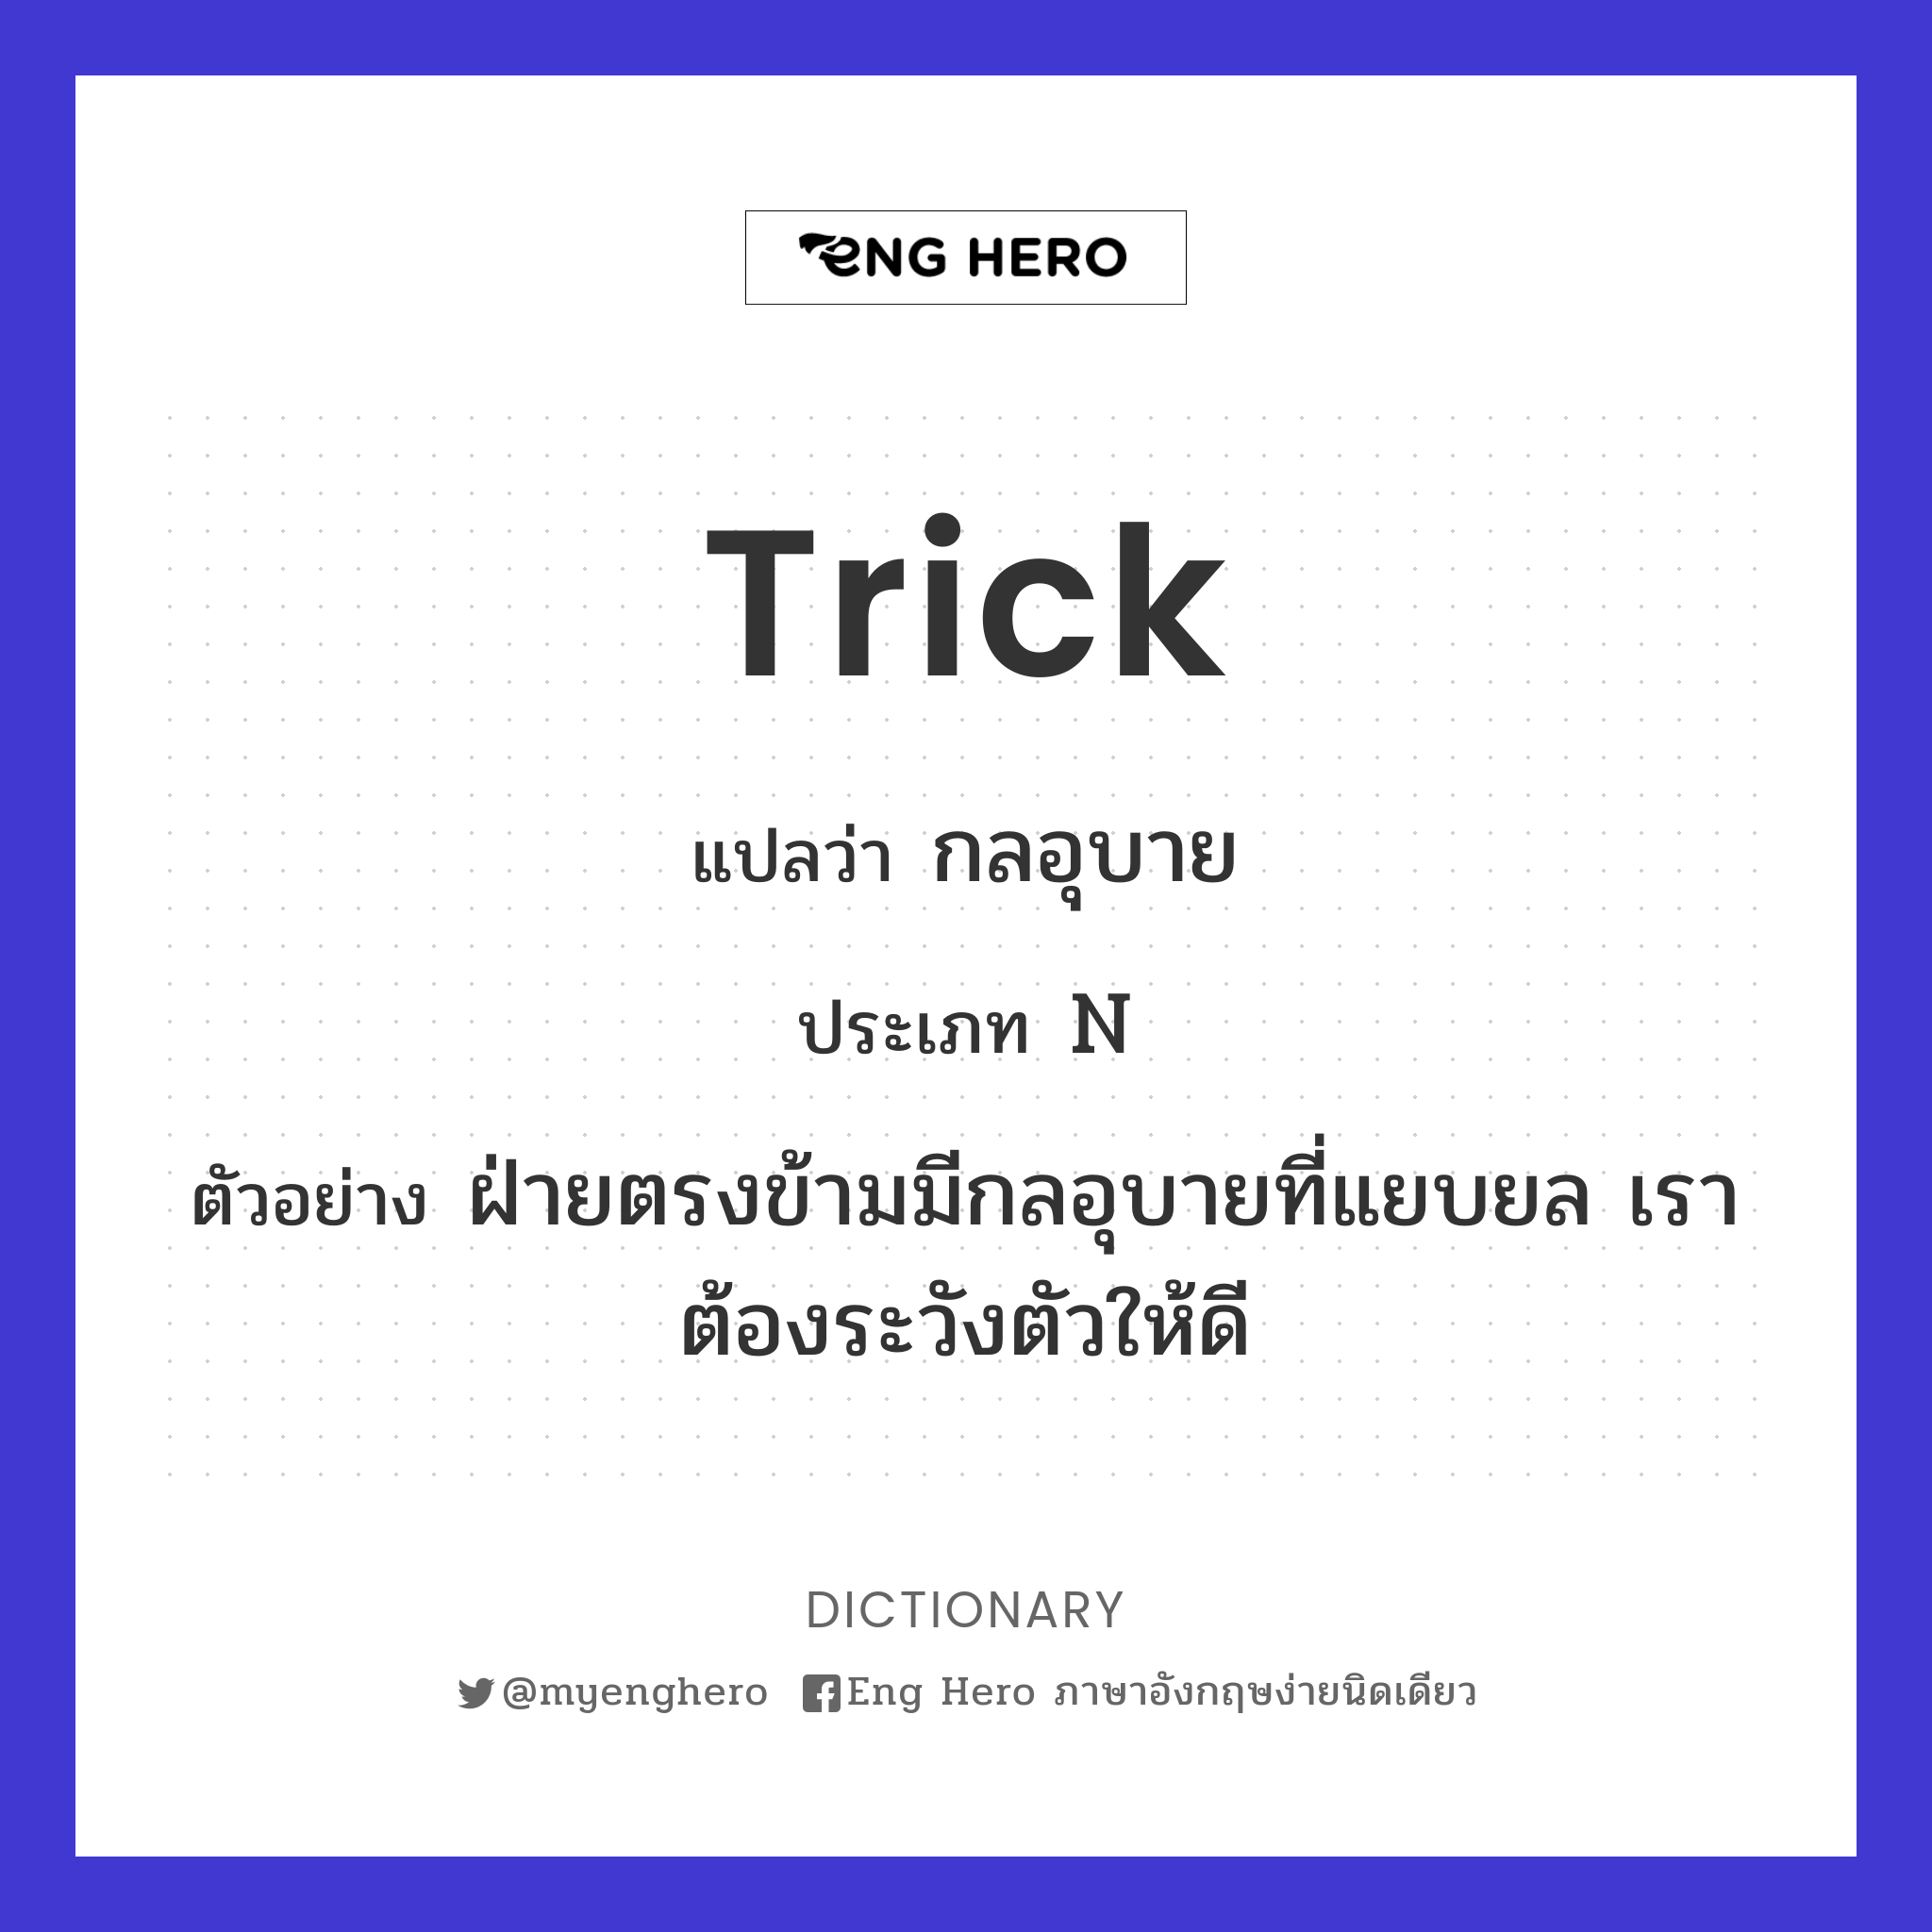 trick